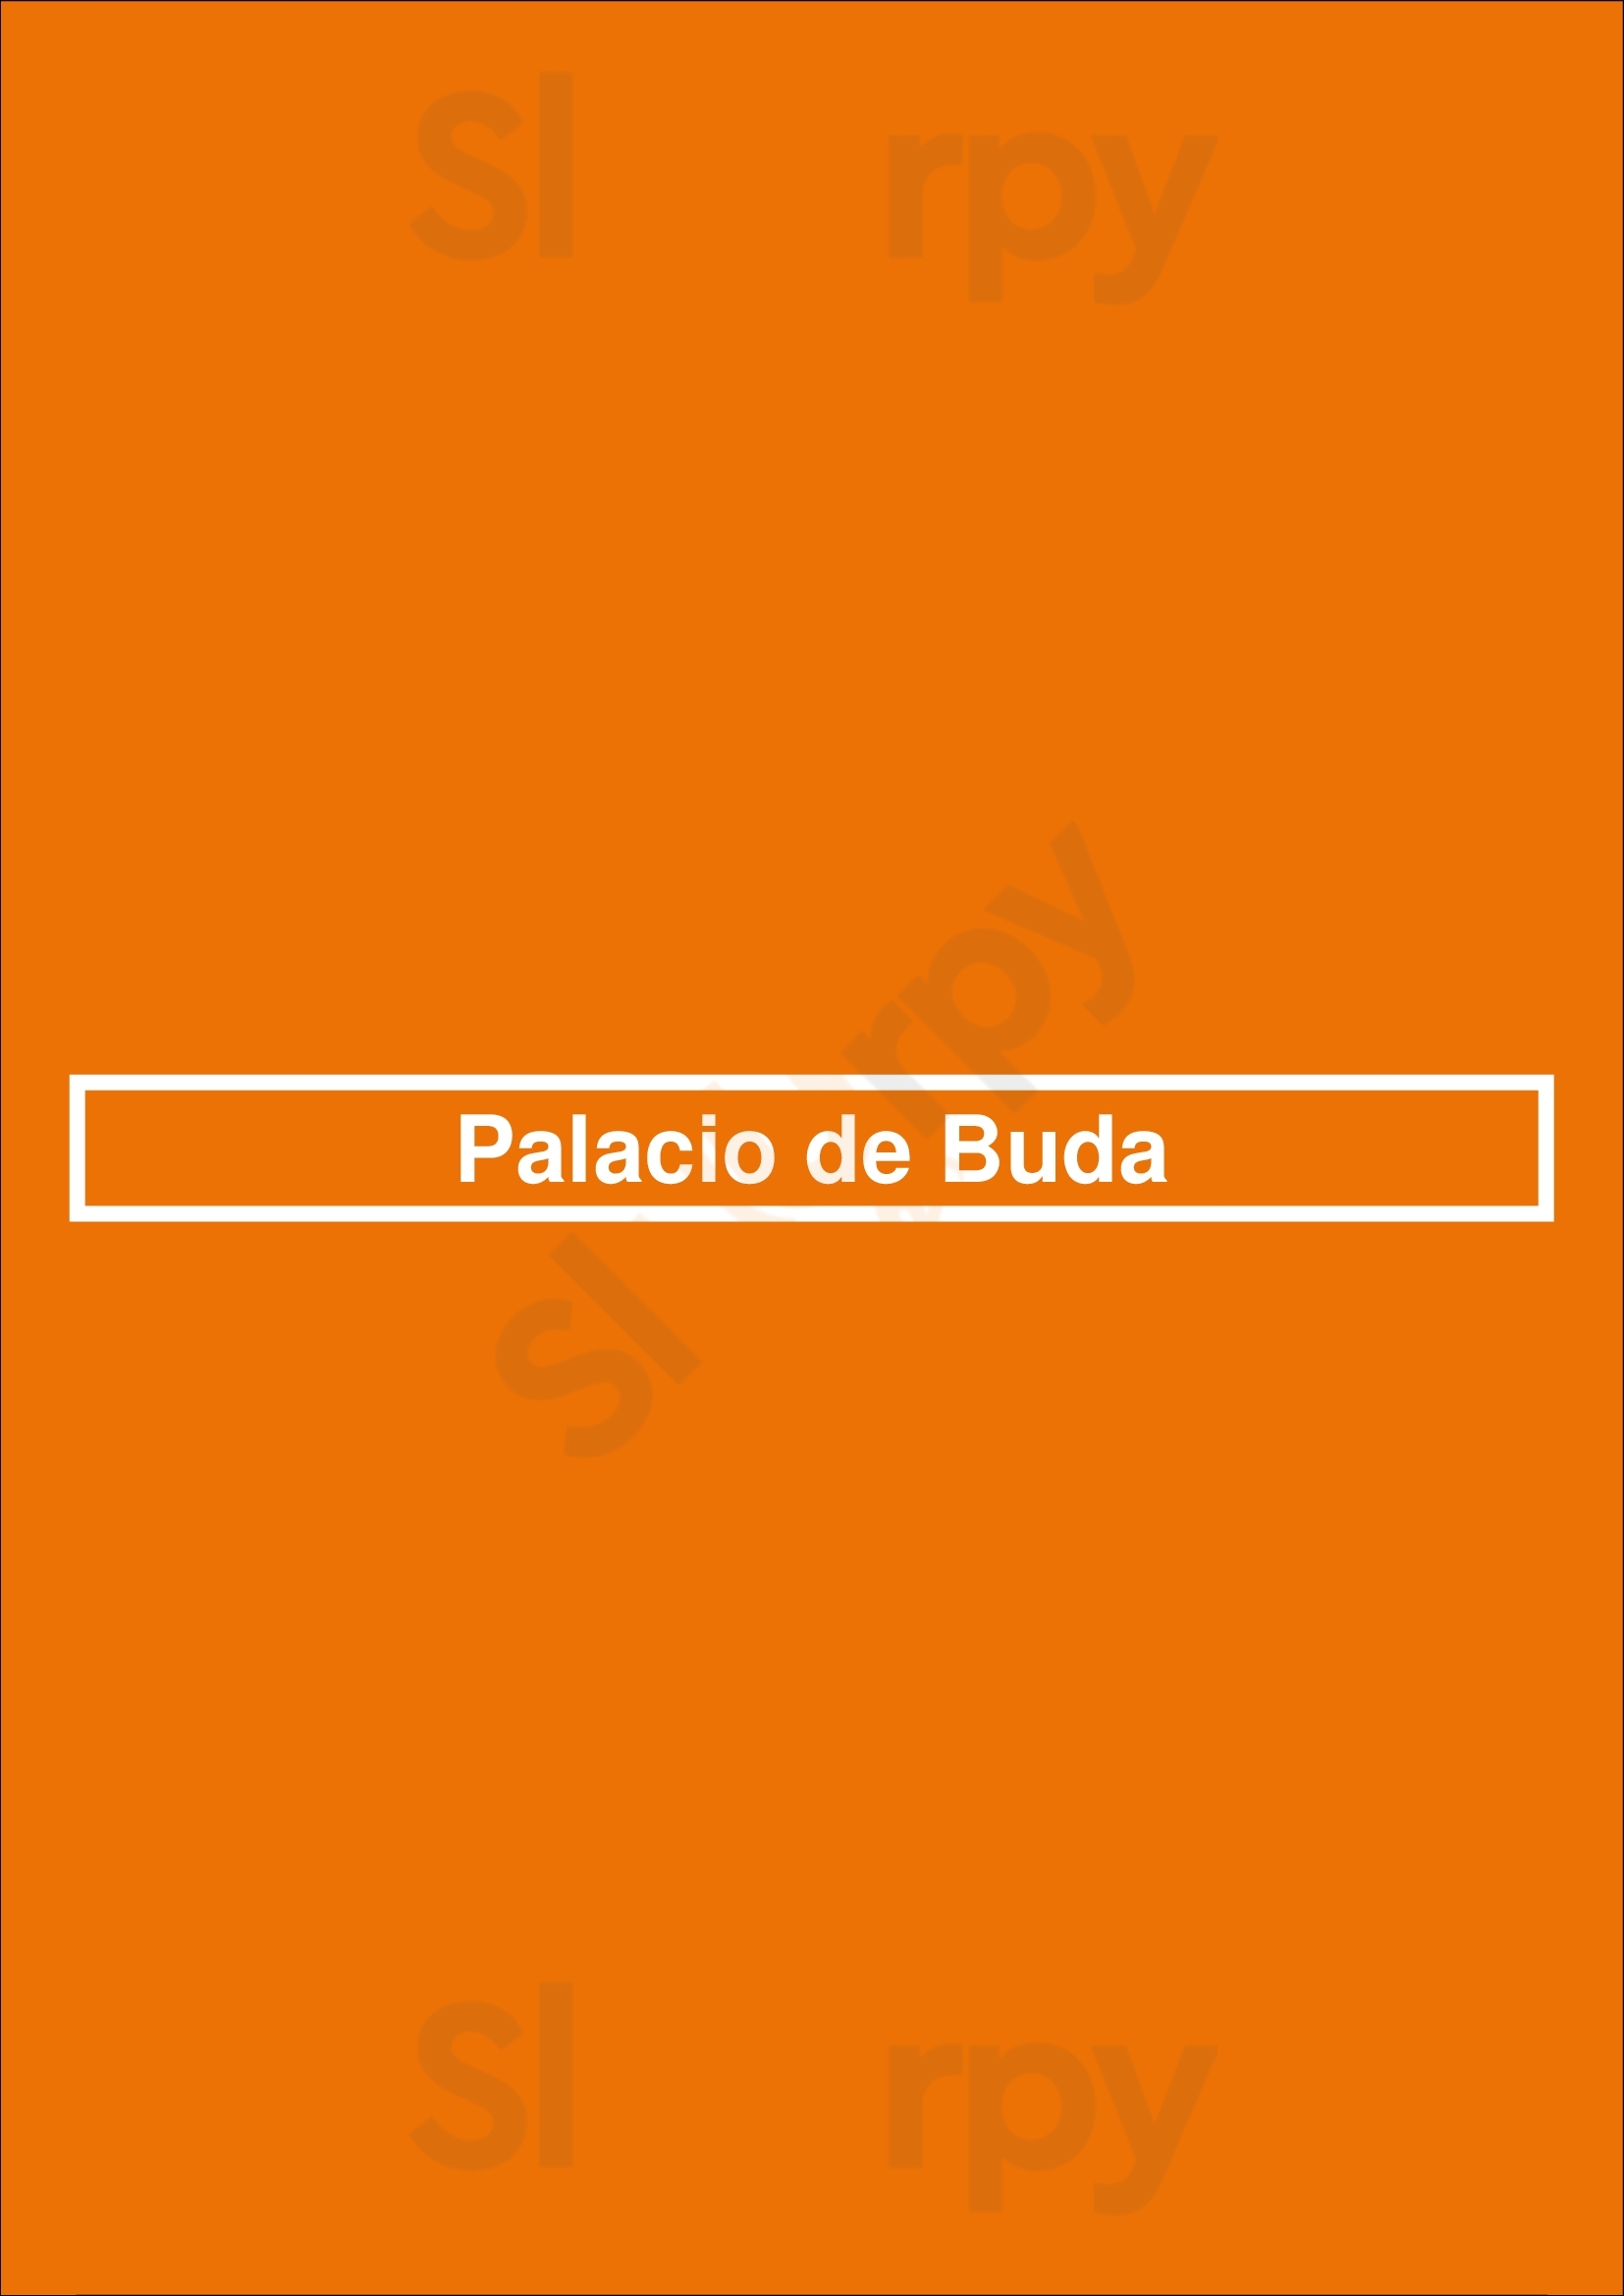 Palacio De Buda Lisboa Menu - 1